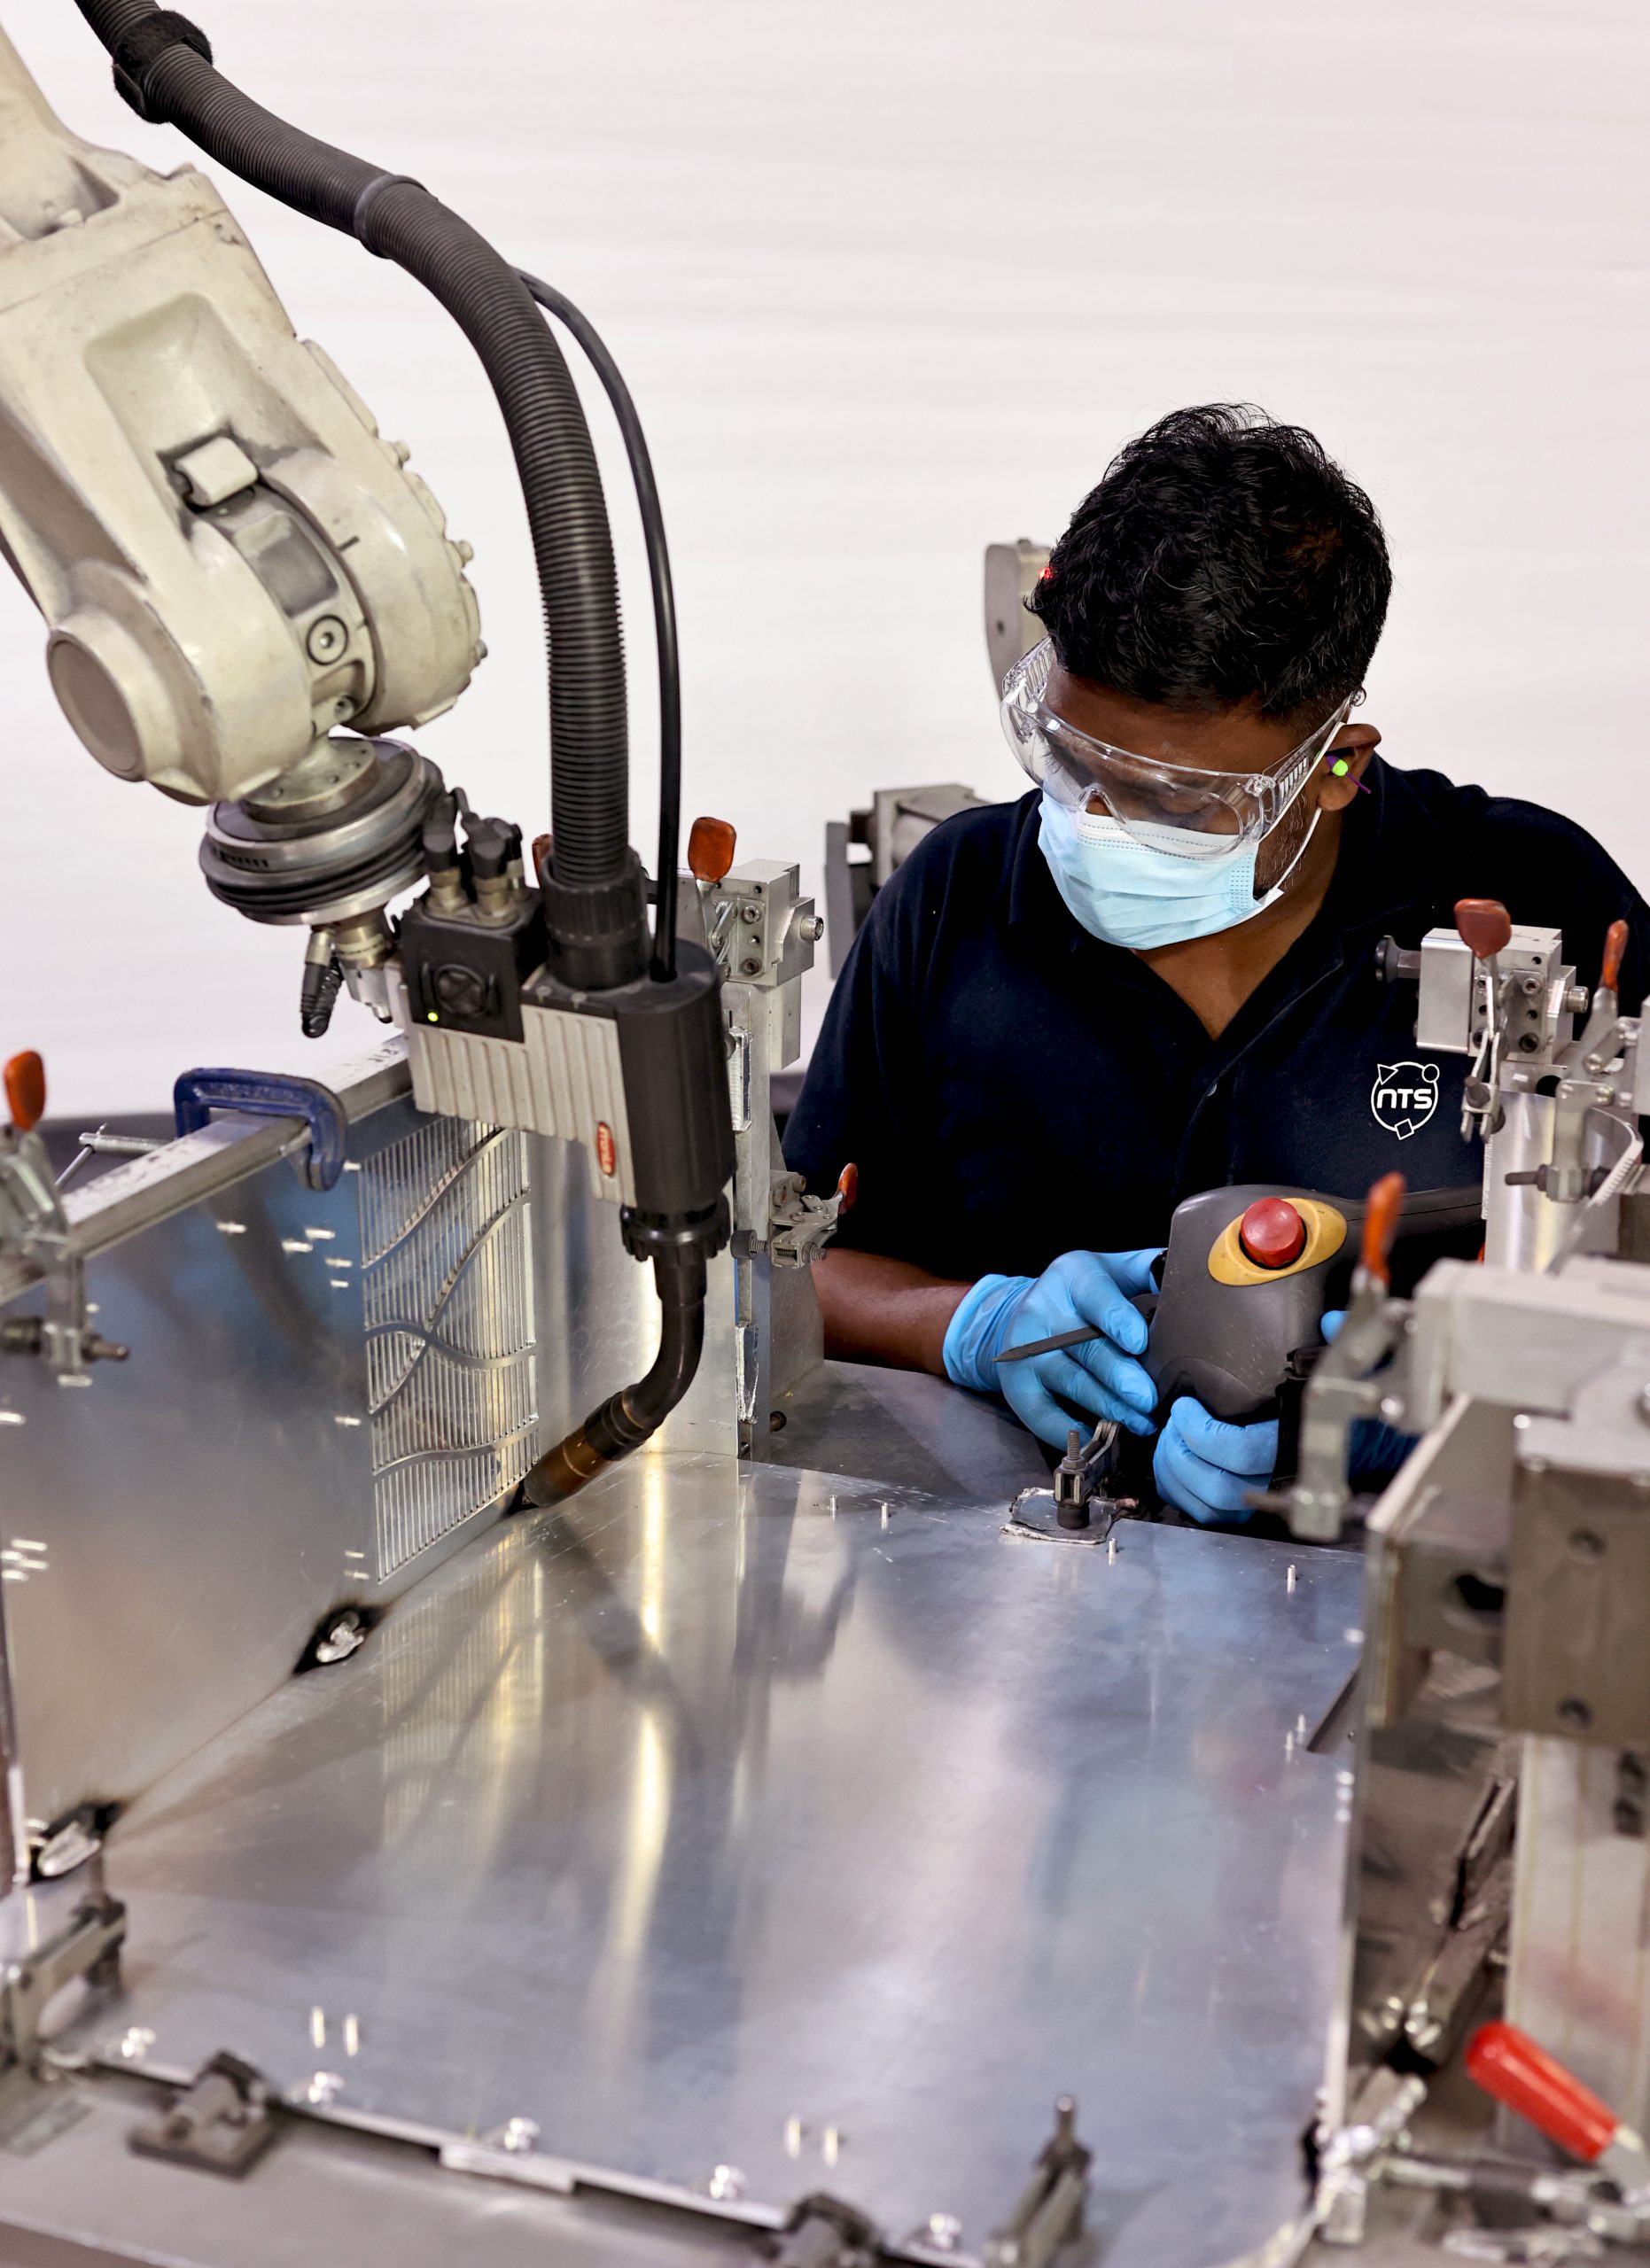 NTS Singapore employee working with machine for mechatronics and mechanics